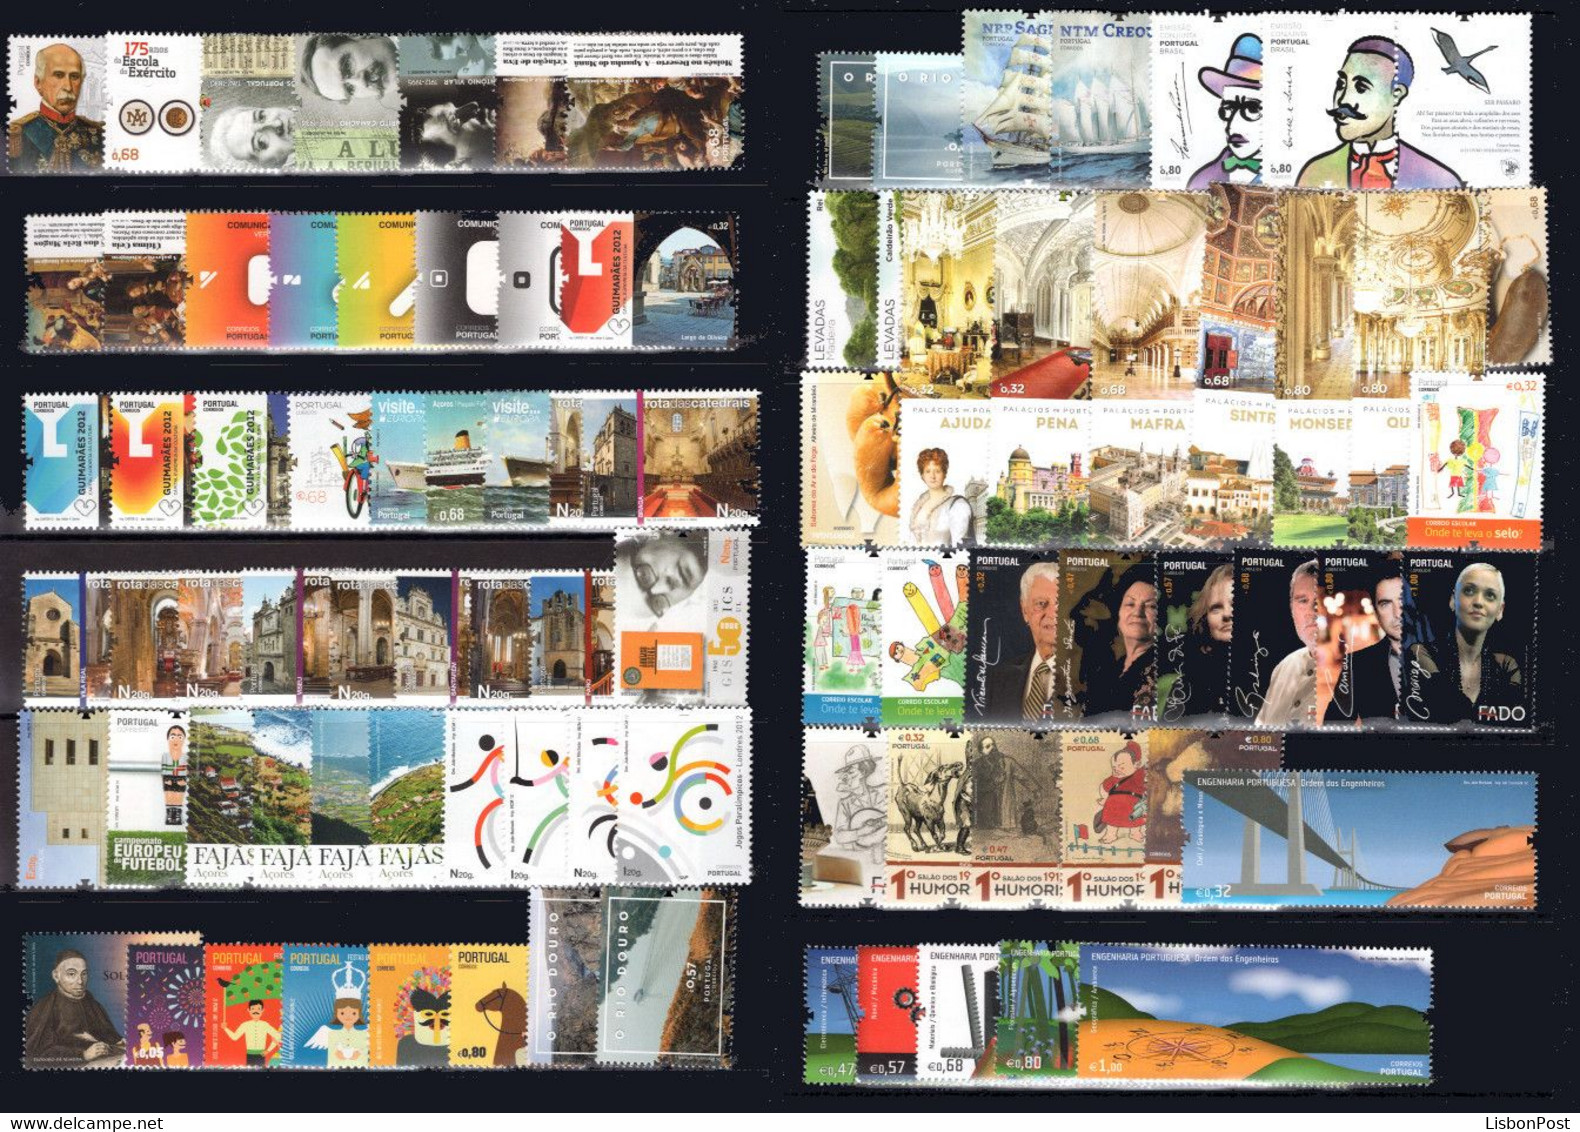 2012 Portugal Azores Madeira Complete Year MNH Stamps. Année Compléte NeufSansCharnière. Ano Completo Novo Sem Charneira - Années Complètes